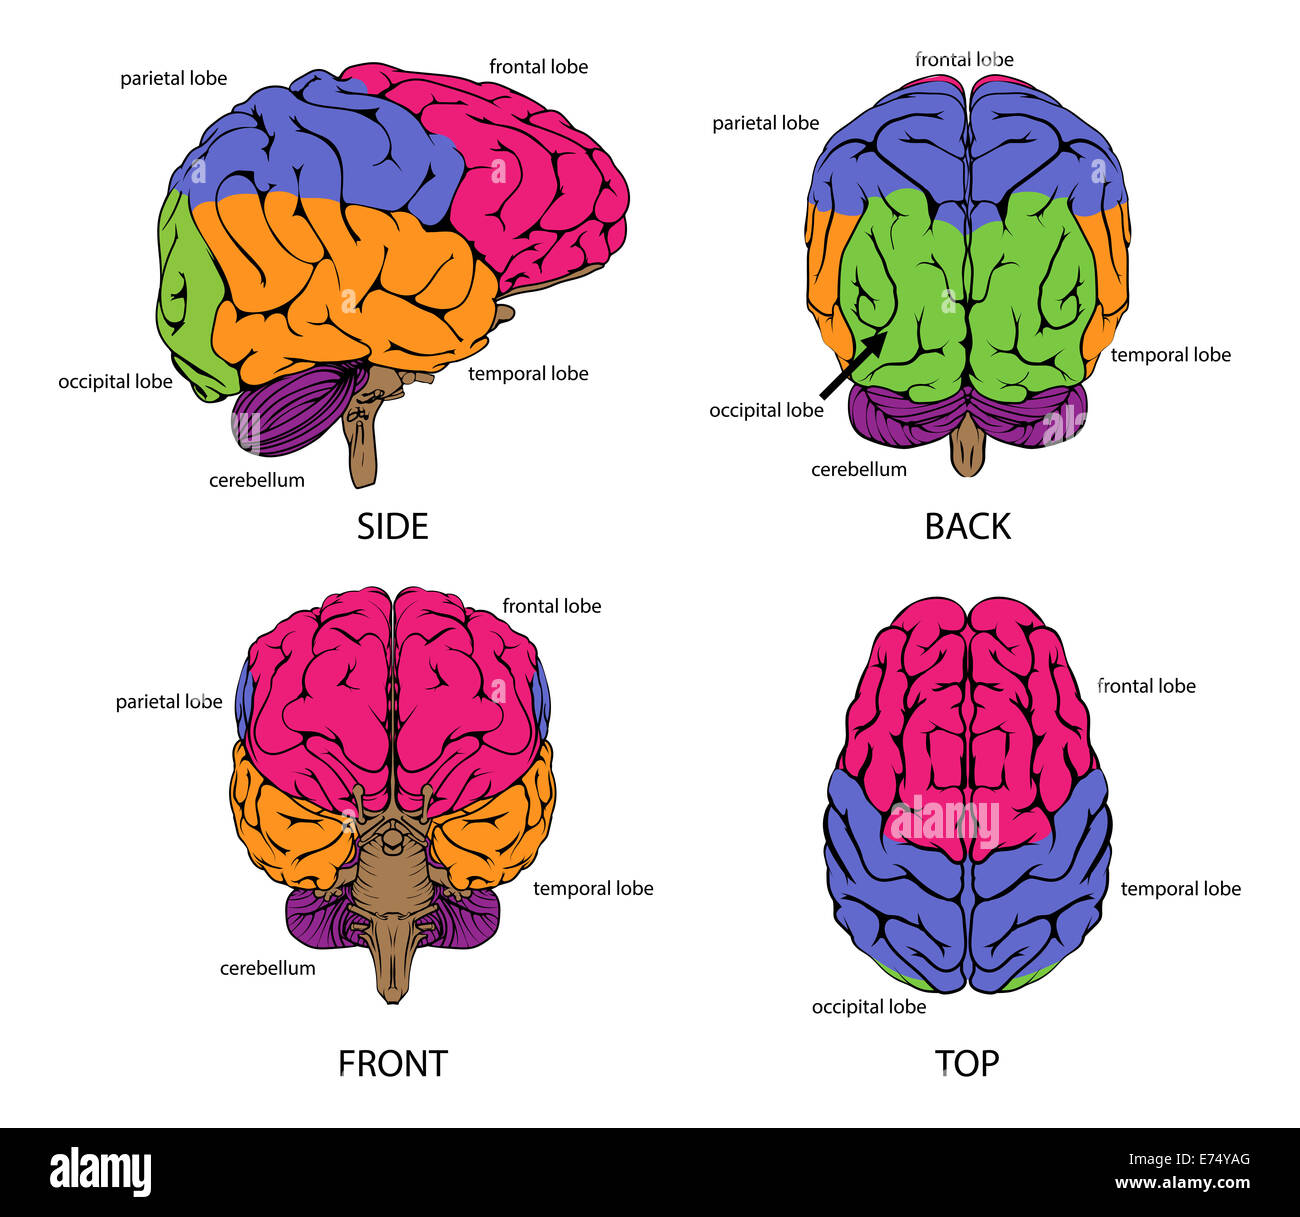 human brain front illustration